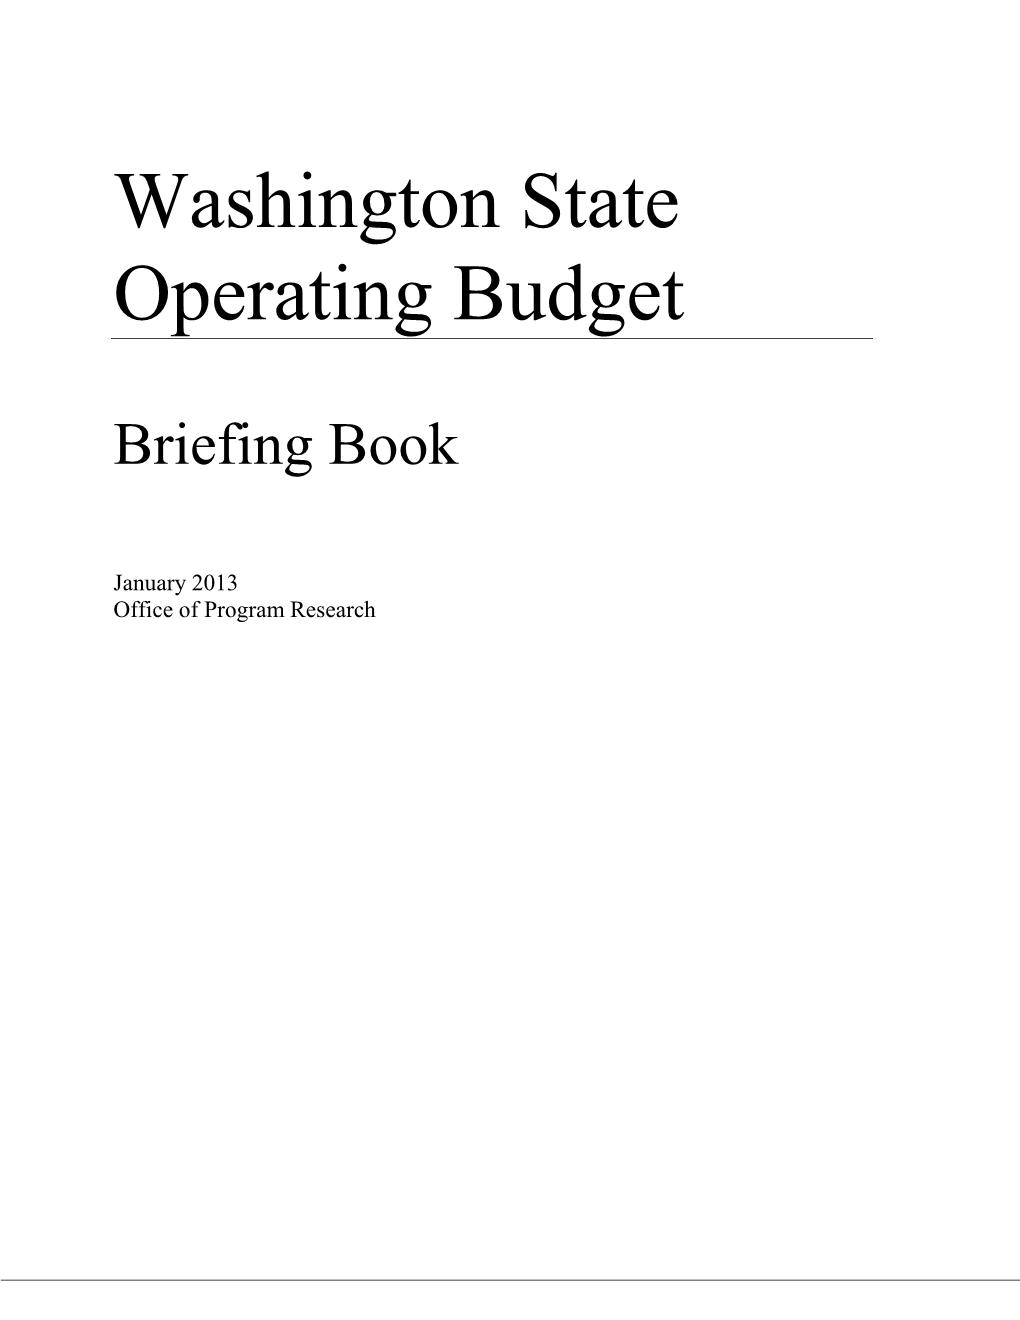 Washington State Operating Budget